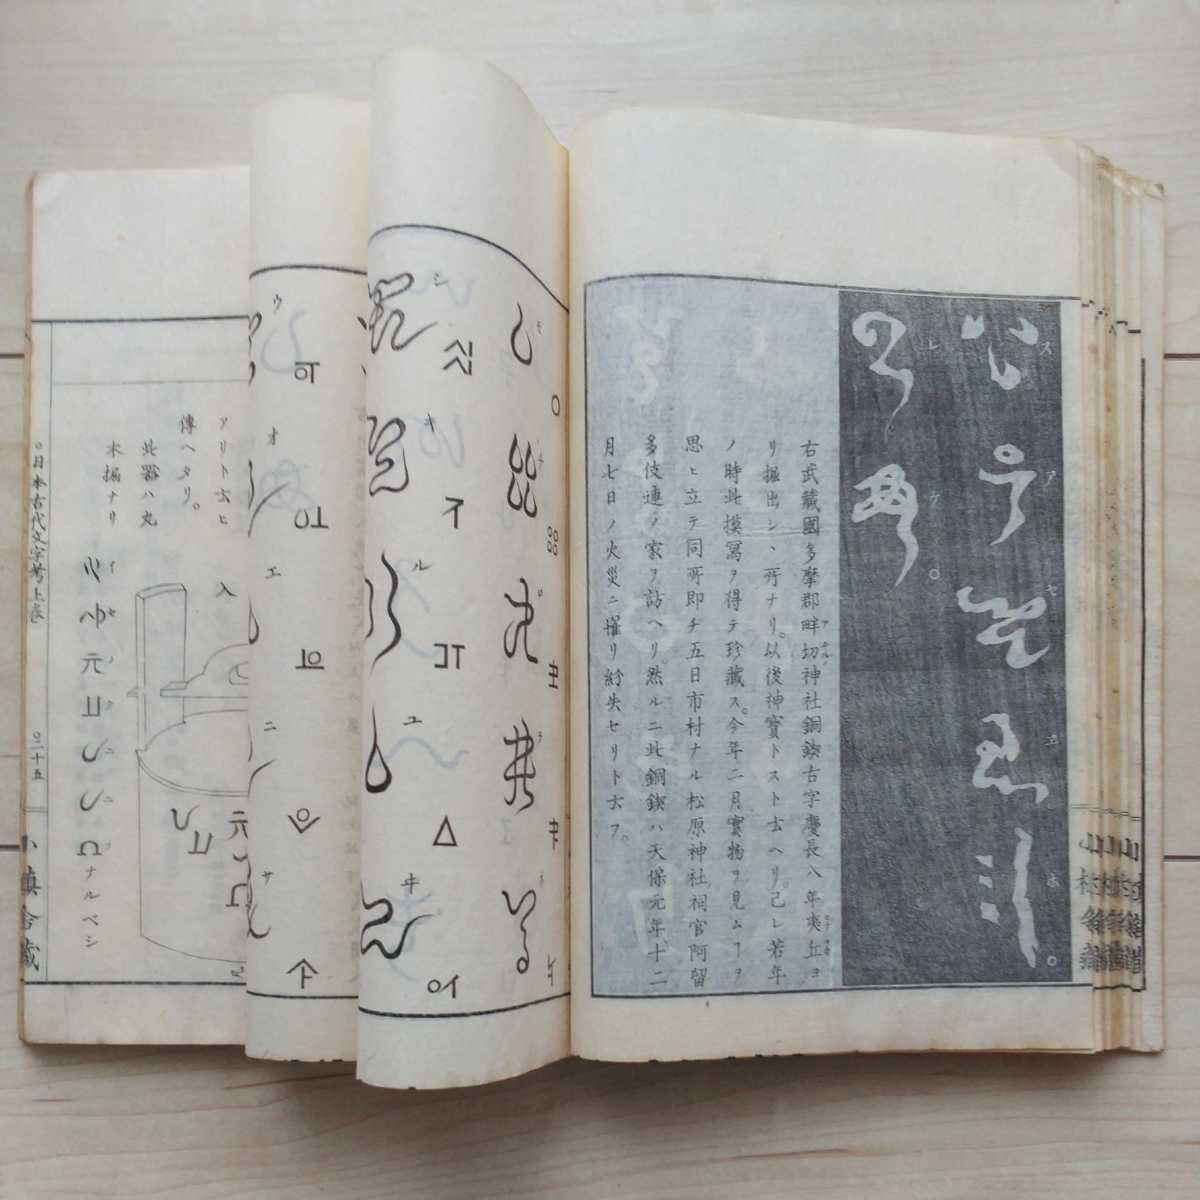 ■『日本古代文字考』上下巻揃。落合直澄著。明治21年初刷。小槇舎蔵版。拵帙付。■日本各地に遺る神代文字を調査したFieldwork。 5